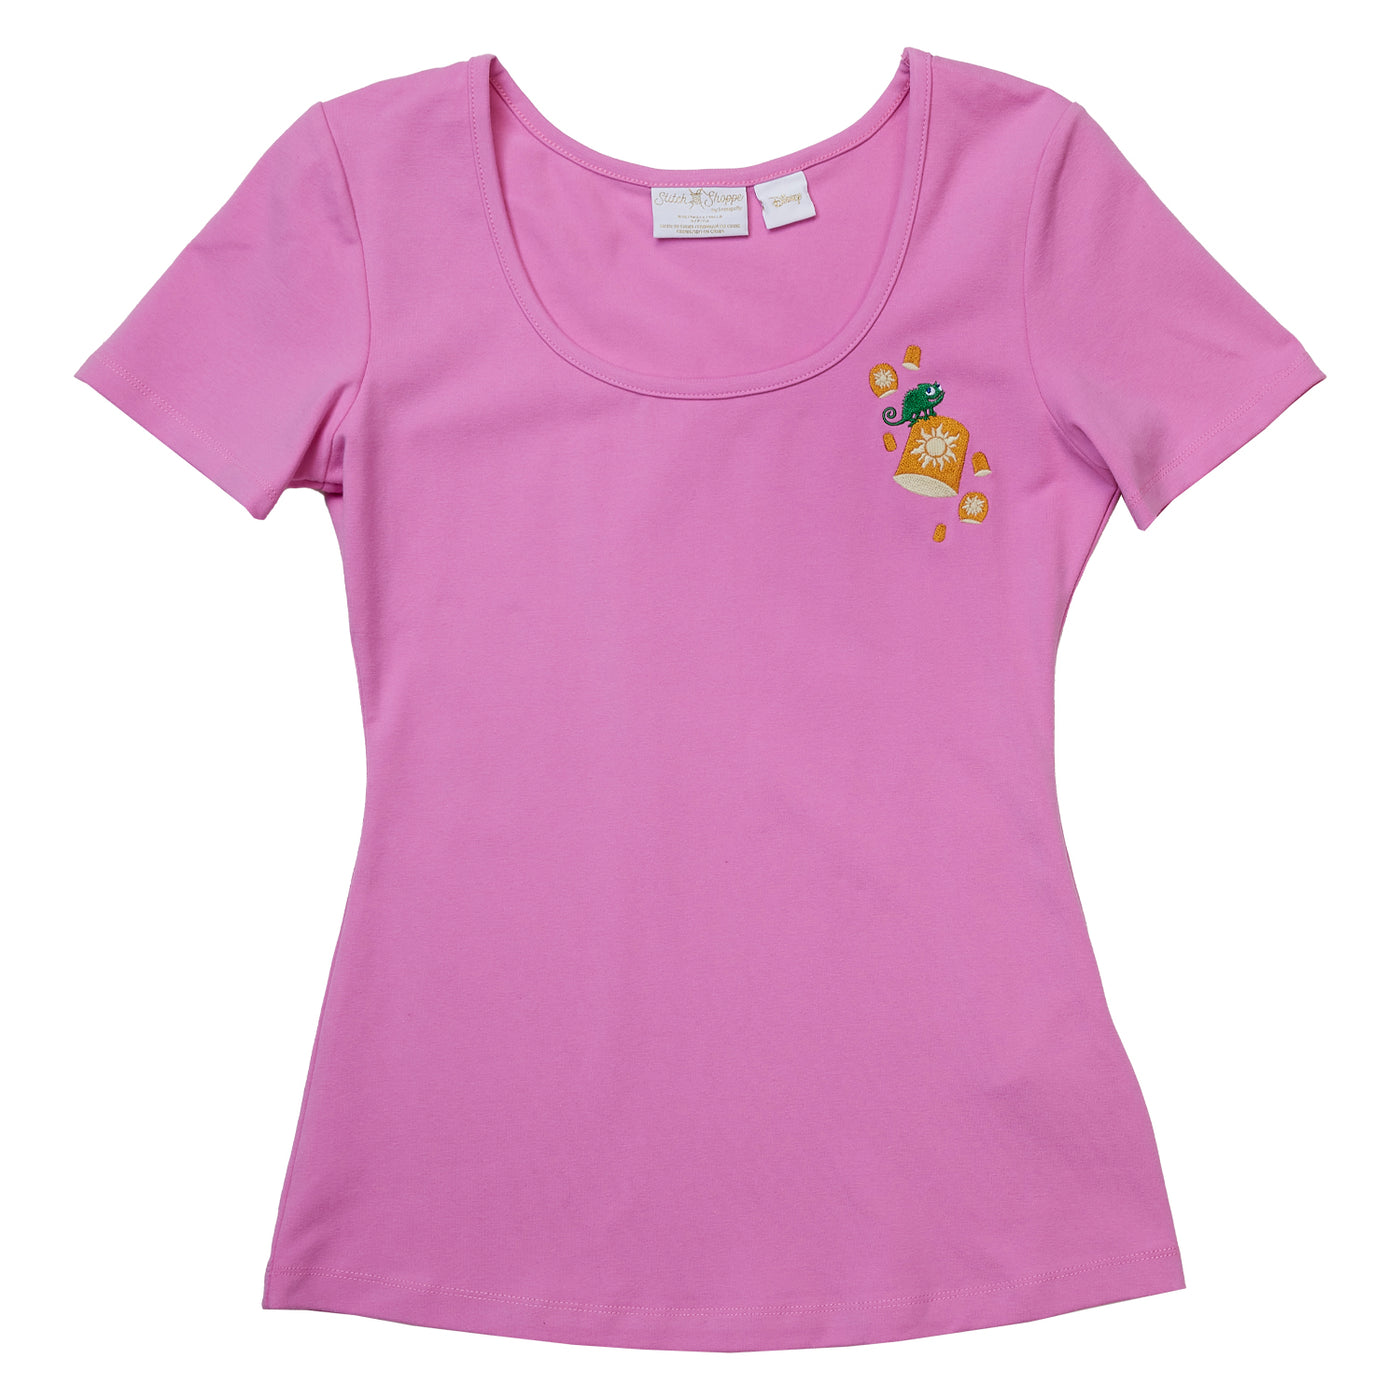 Stitch Shoppe by Loungefly Disney Tangled Rapunzel Lanterns "Kelly" Fashion Top Shirt